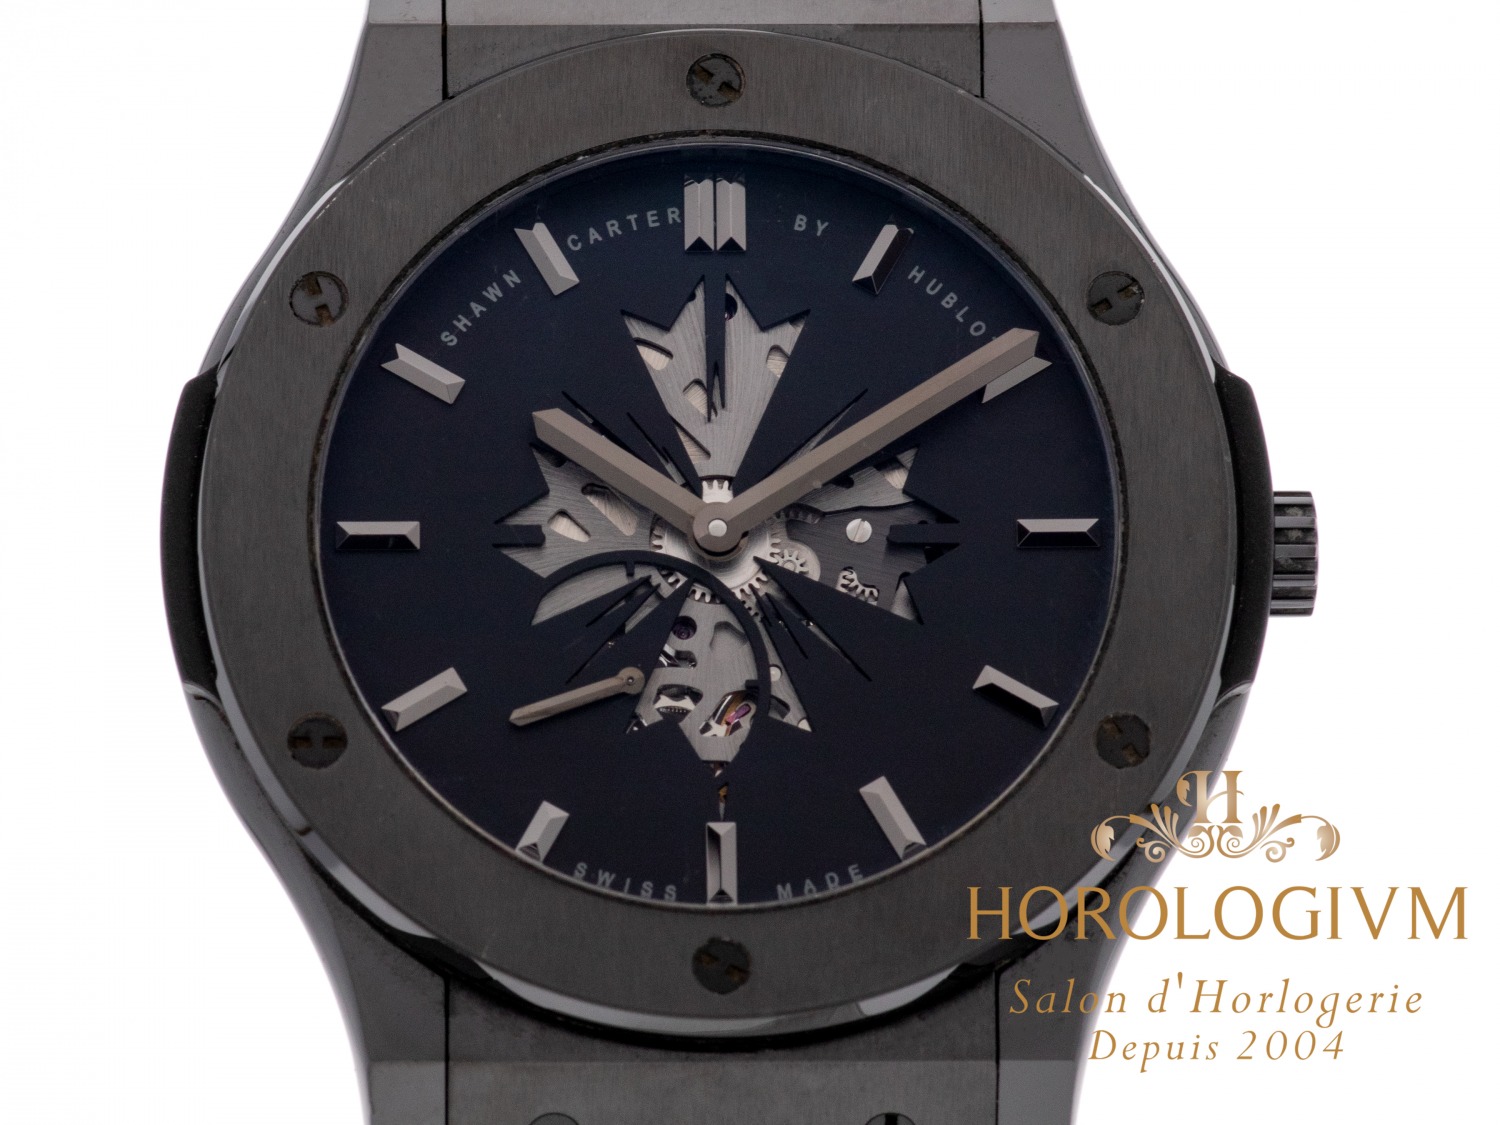 Hublot Classic Fusion Shawn Carter- Limited Edition of 250 Pieces REF 515.CM.1040.LR.SHC 13 watch, black ceramic